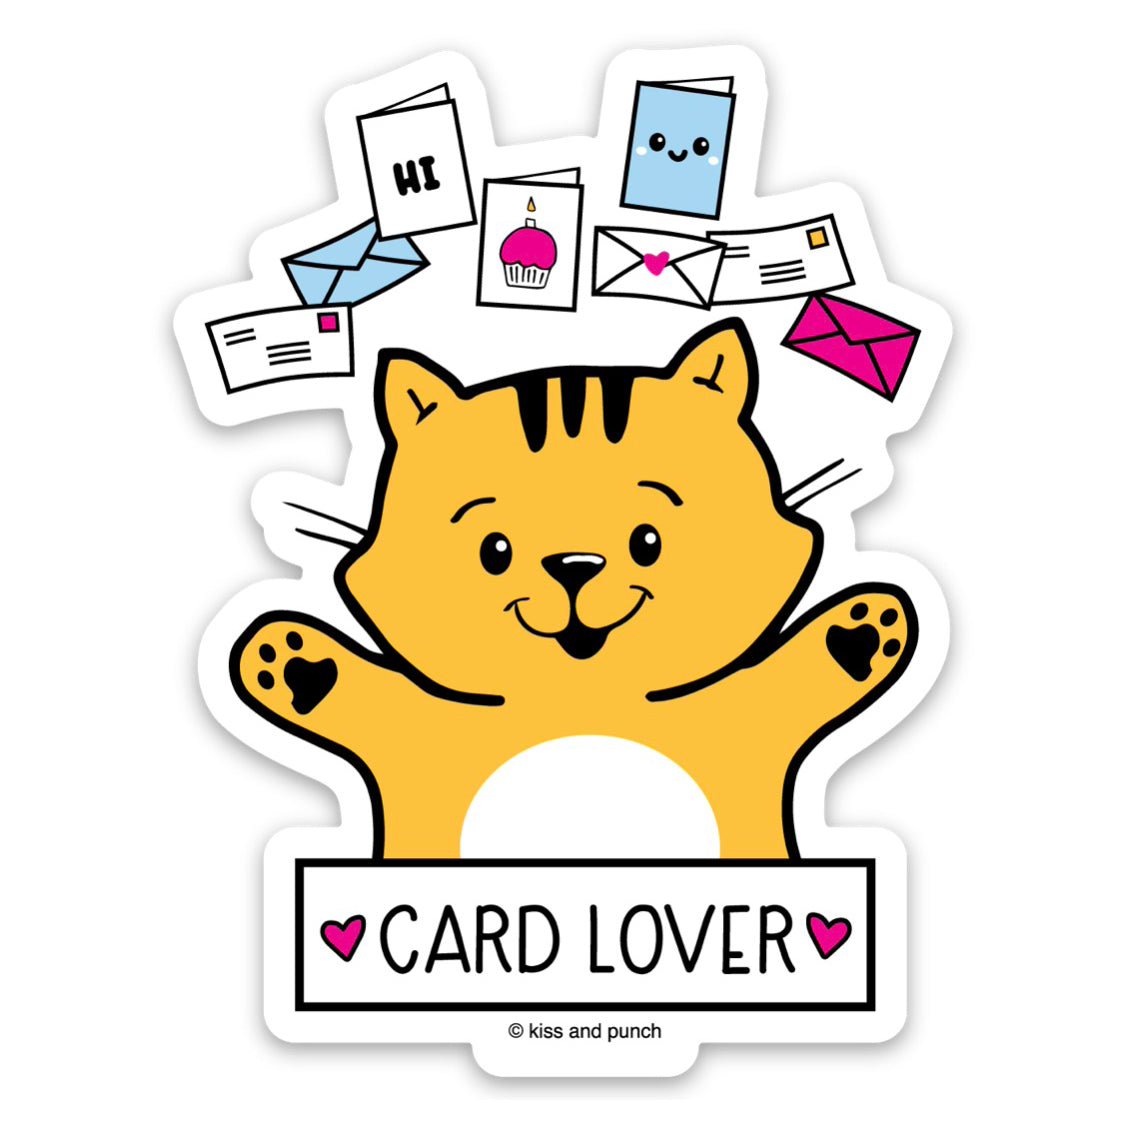 3 Inch Cute Card Lover Kitty Vinyl Sticker - Snail Mail Package Sticker